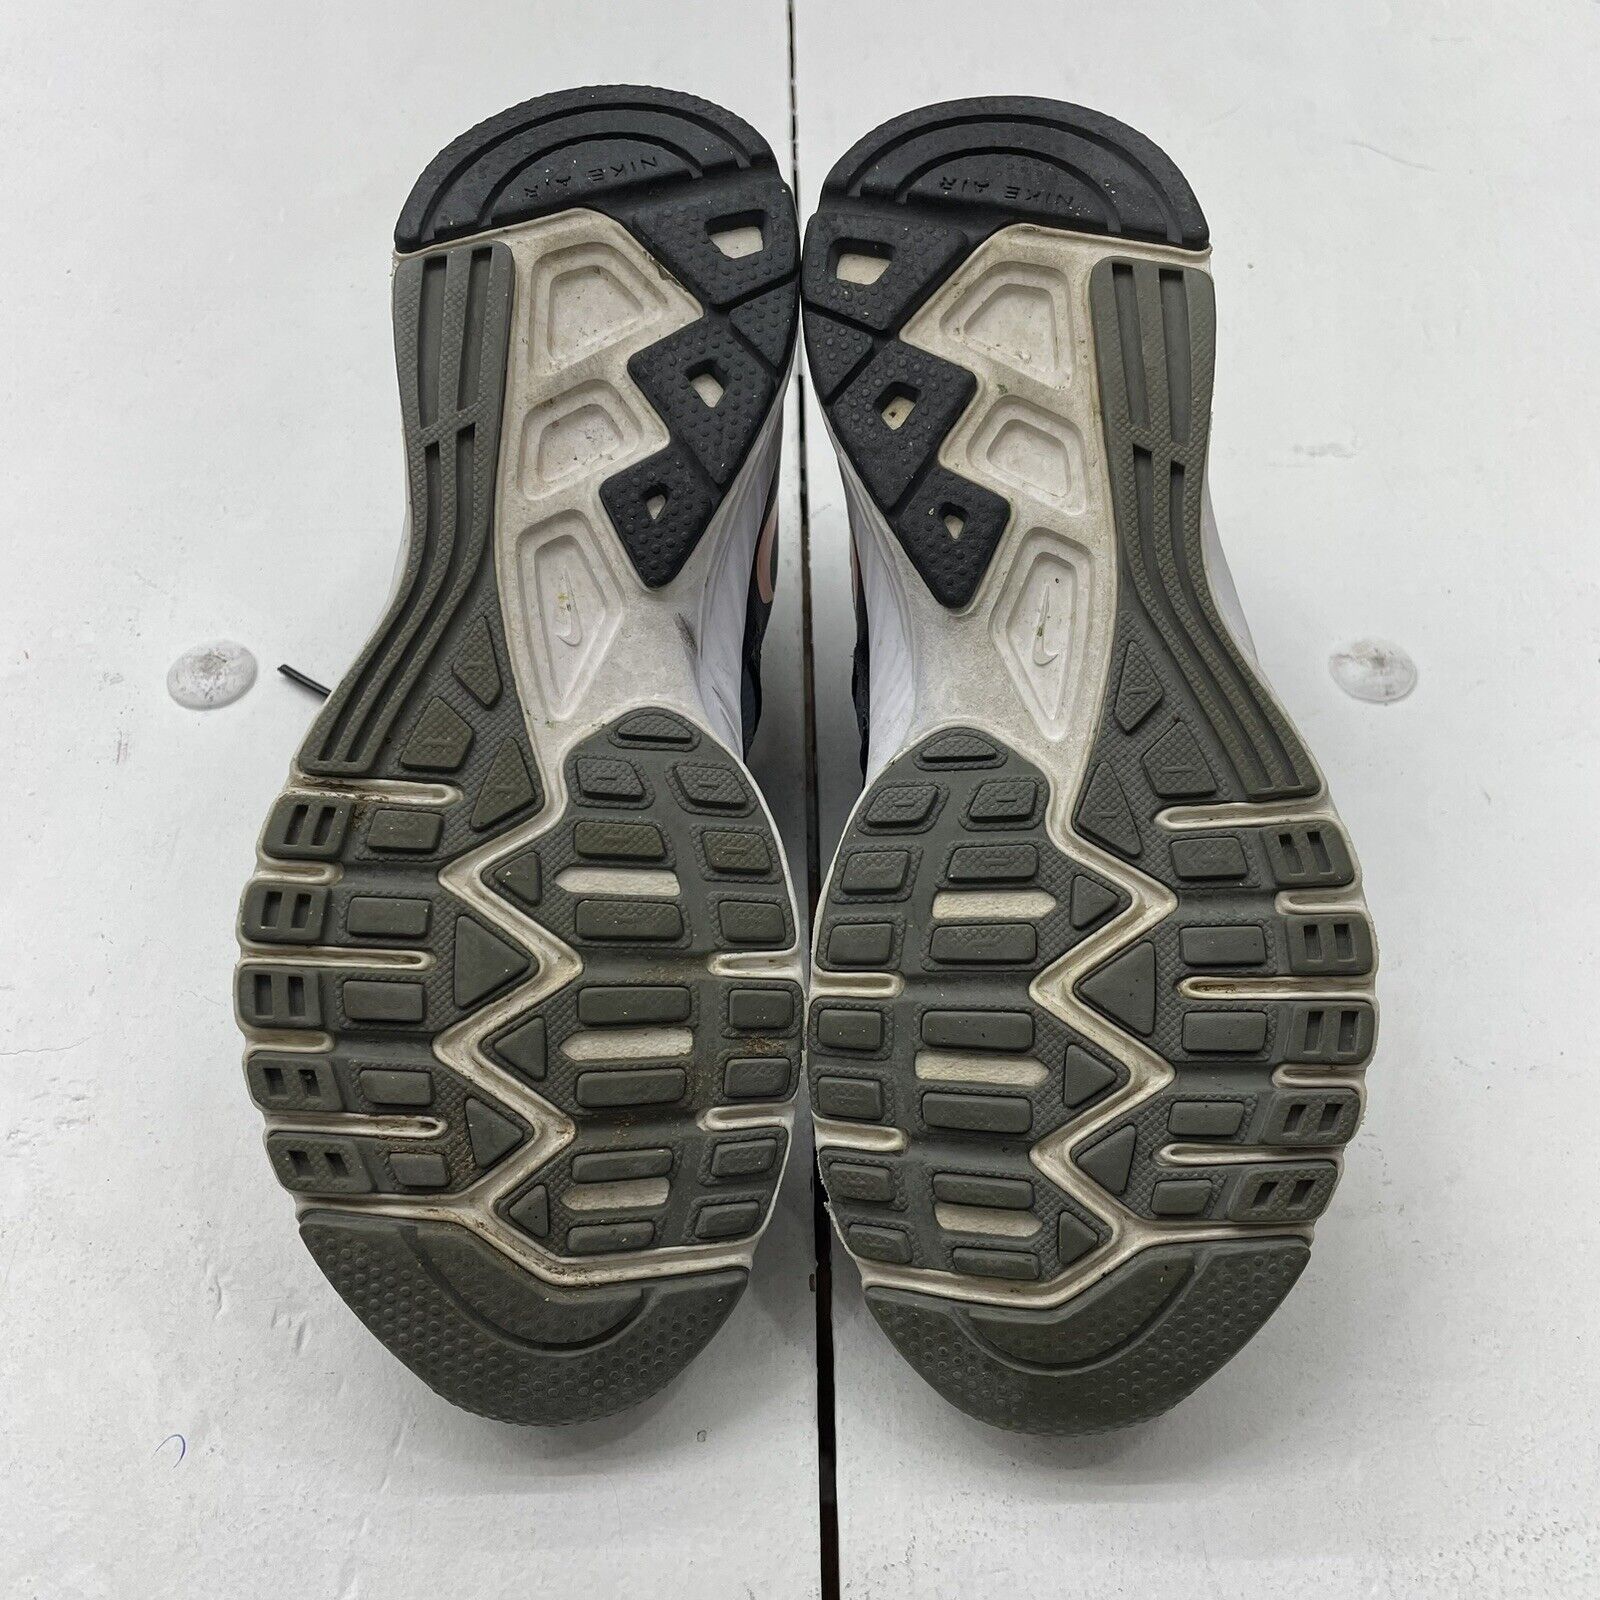 Nike 6 Gray Black Running Shoes Sneakers 843882-010 Wom - beyond exchange